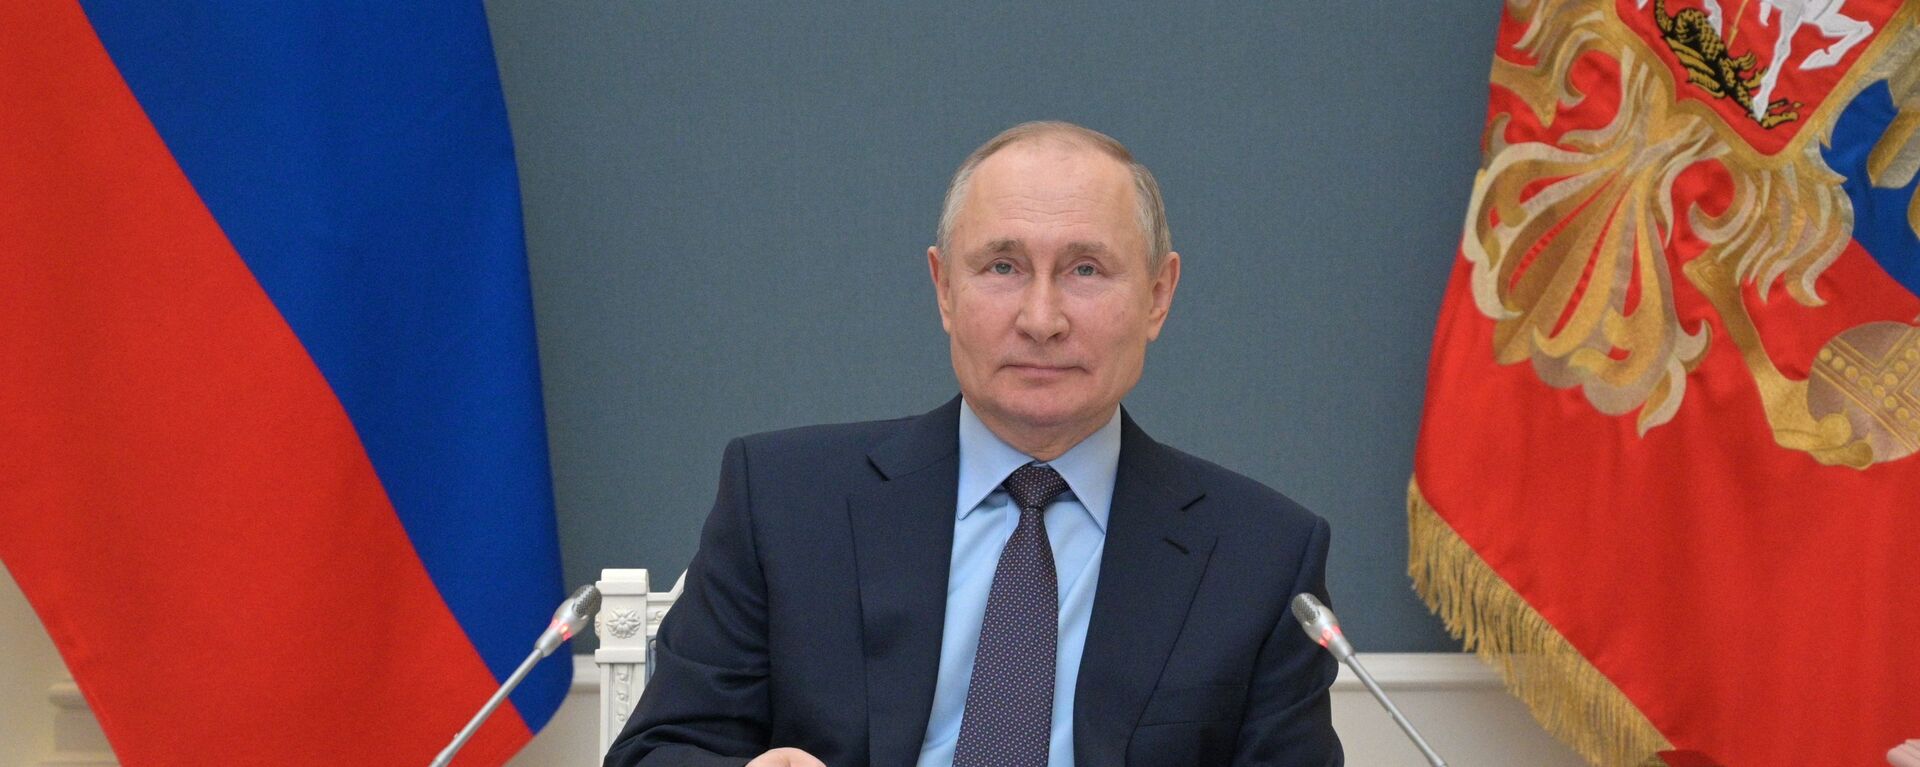 Predsednik Rusije Vladimir Putin - Sputnik Srbija, 1920, 29.04.2021